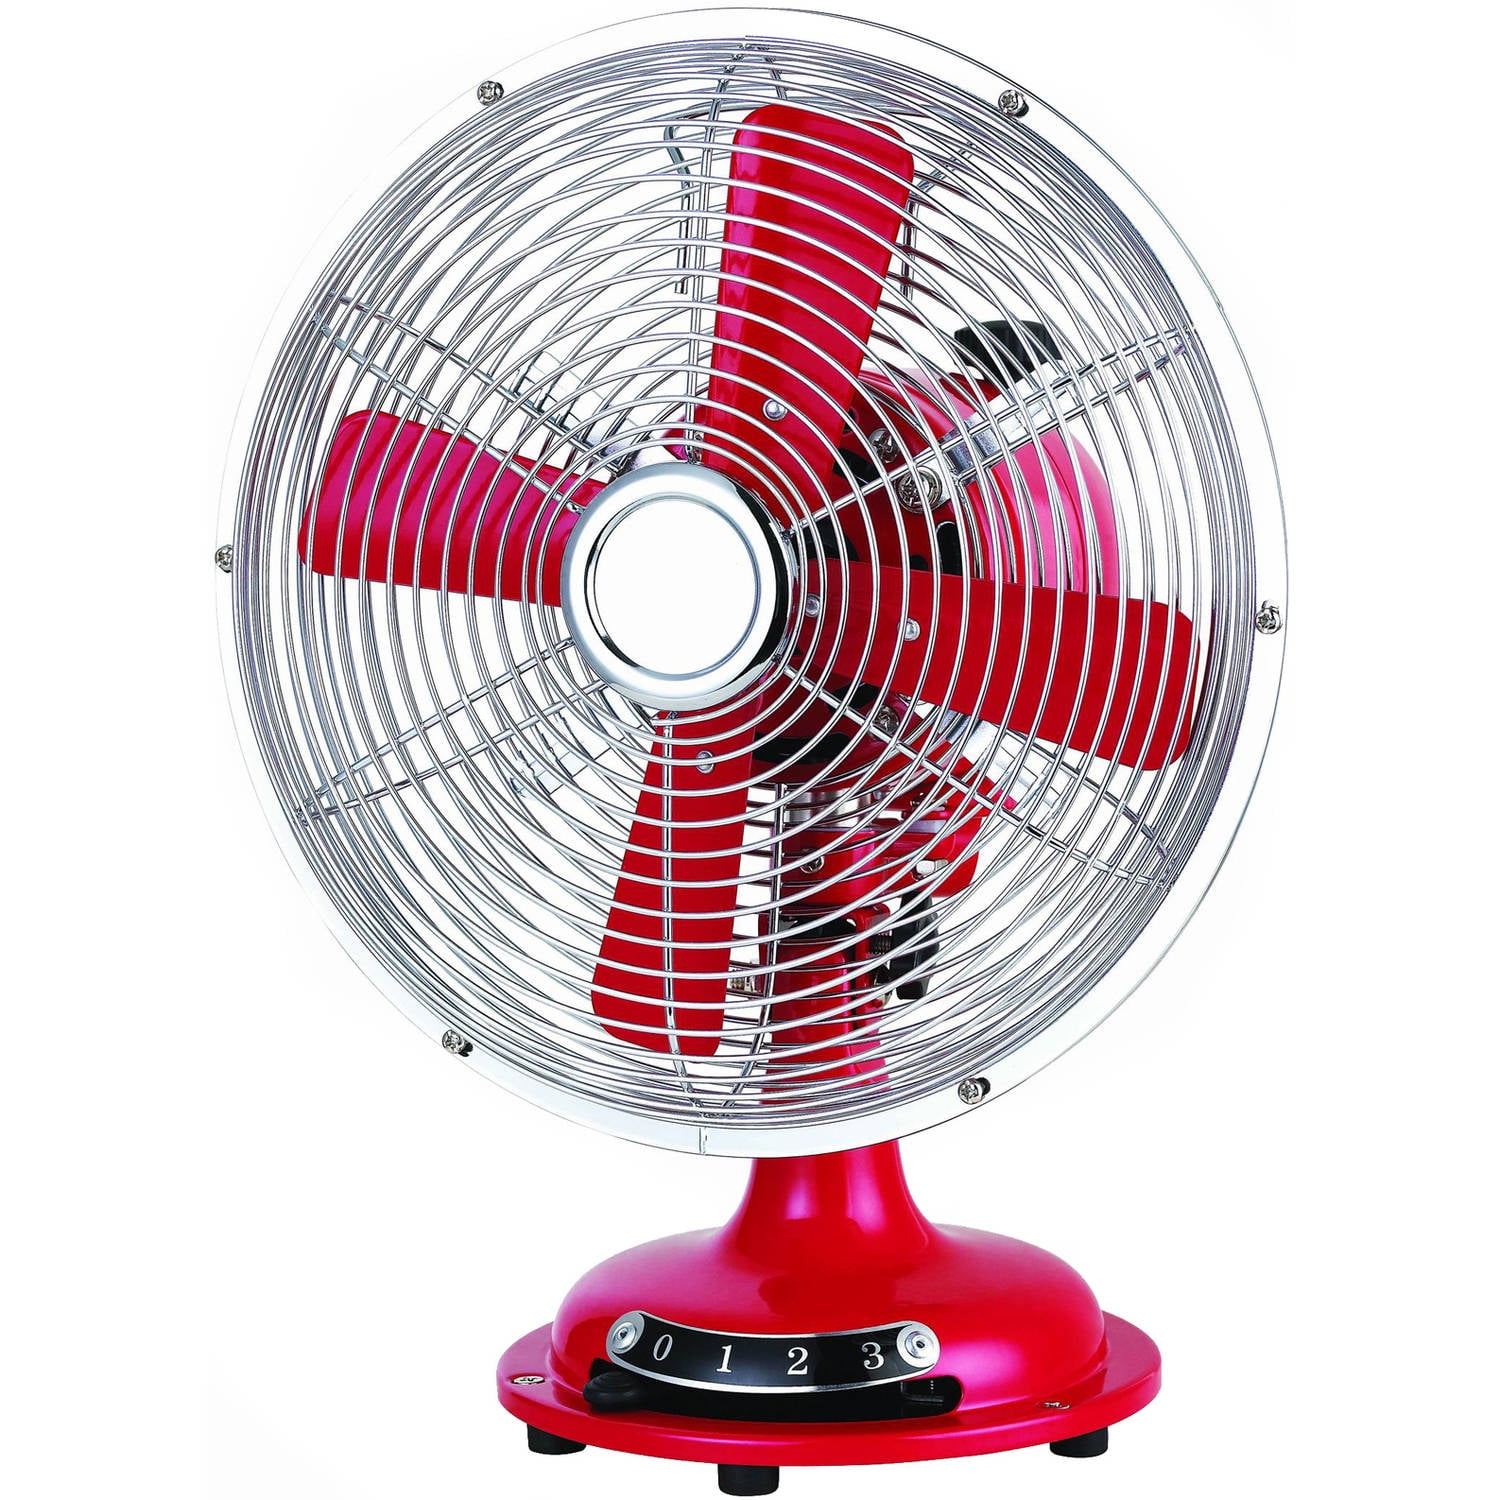 Red fan. Вентилятор Alpina Table Fan. Черно красный вентилятор. Evolution вентилятор. Черно красный вентилятор Dvok.